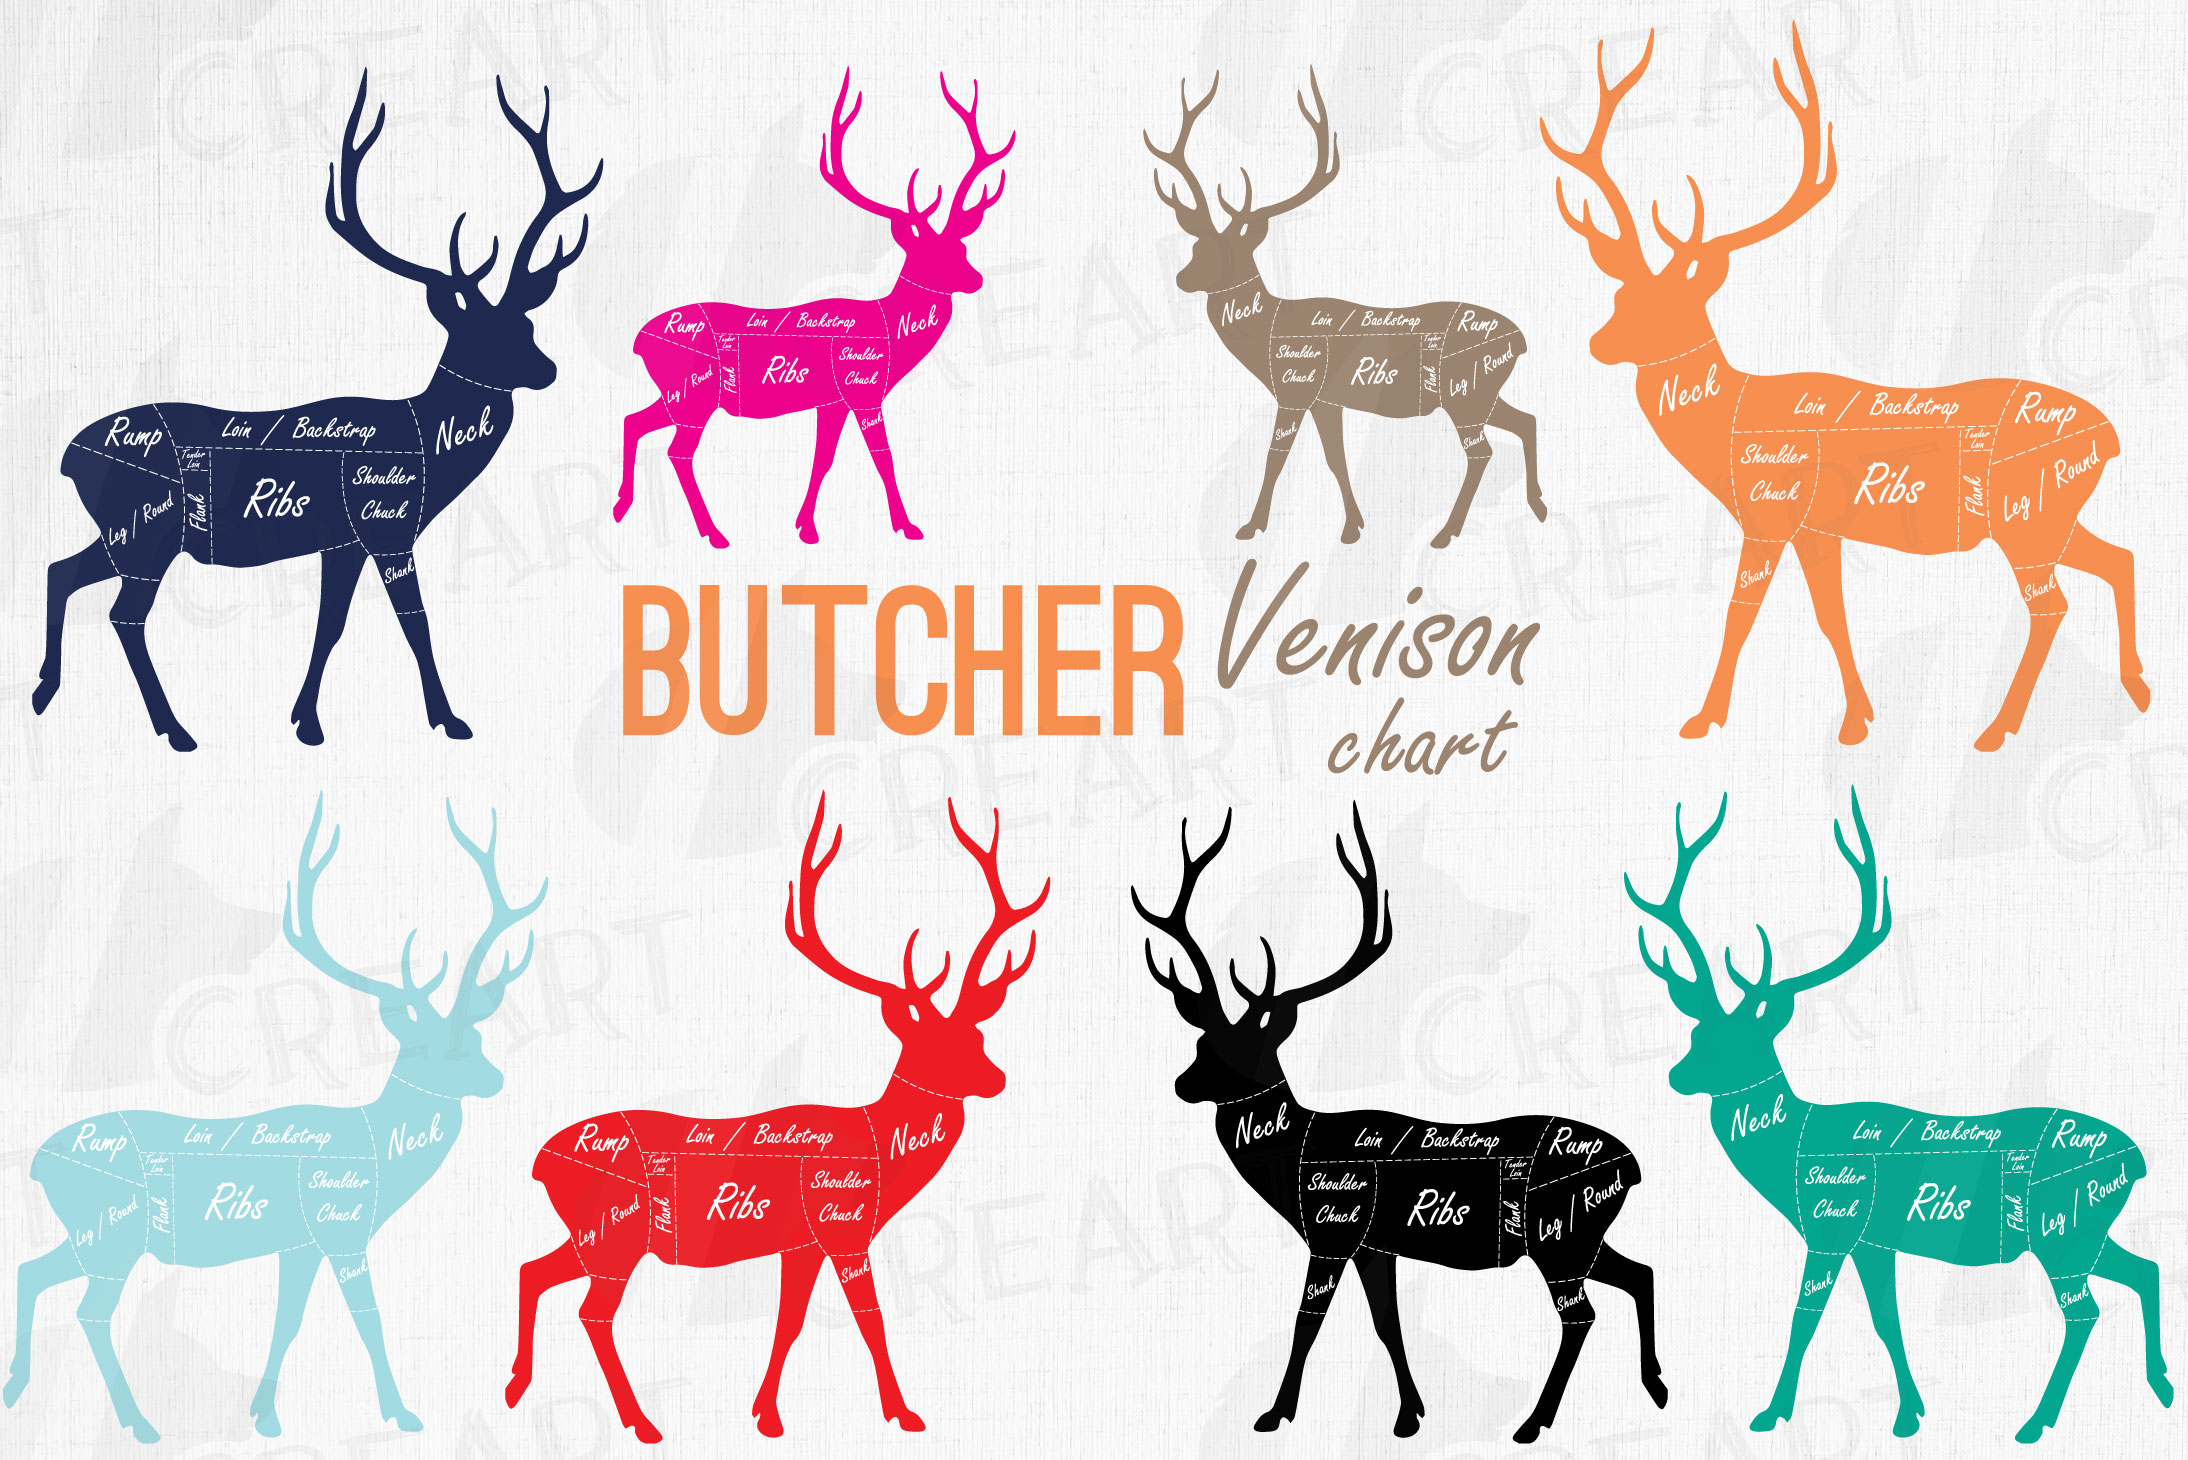 Butcher chart cuts of venison. Printable deer meat cut chart